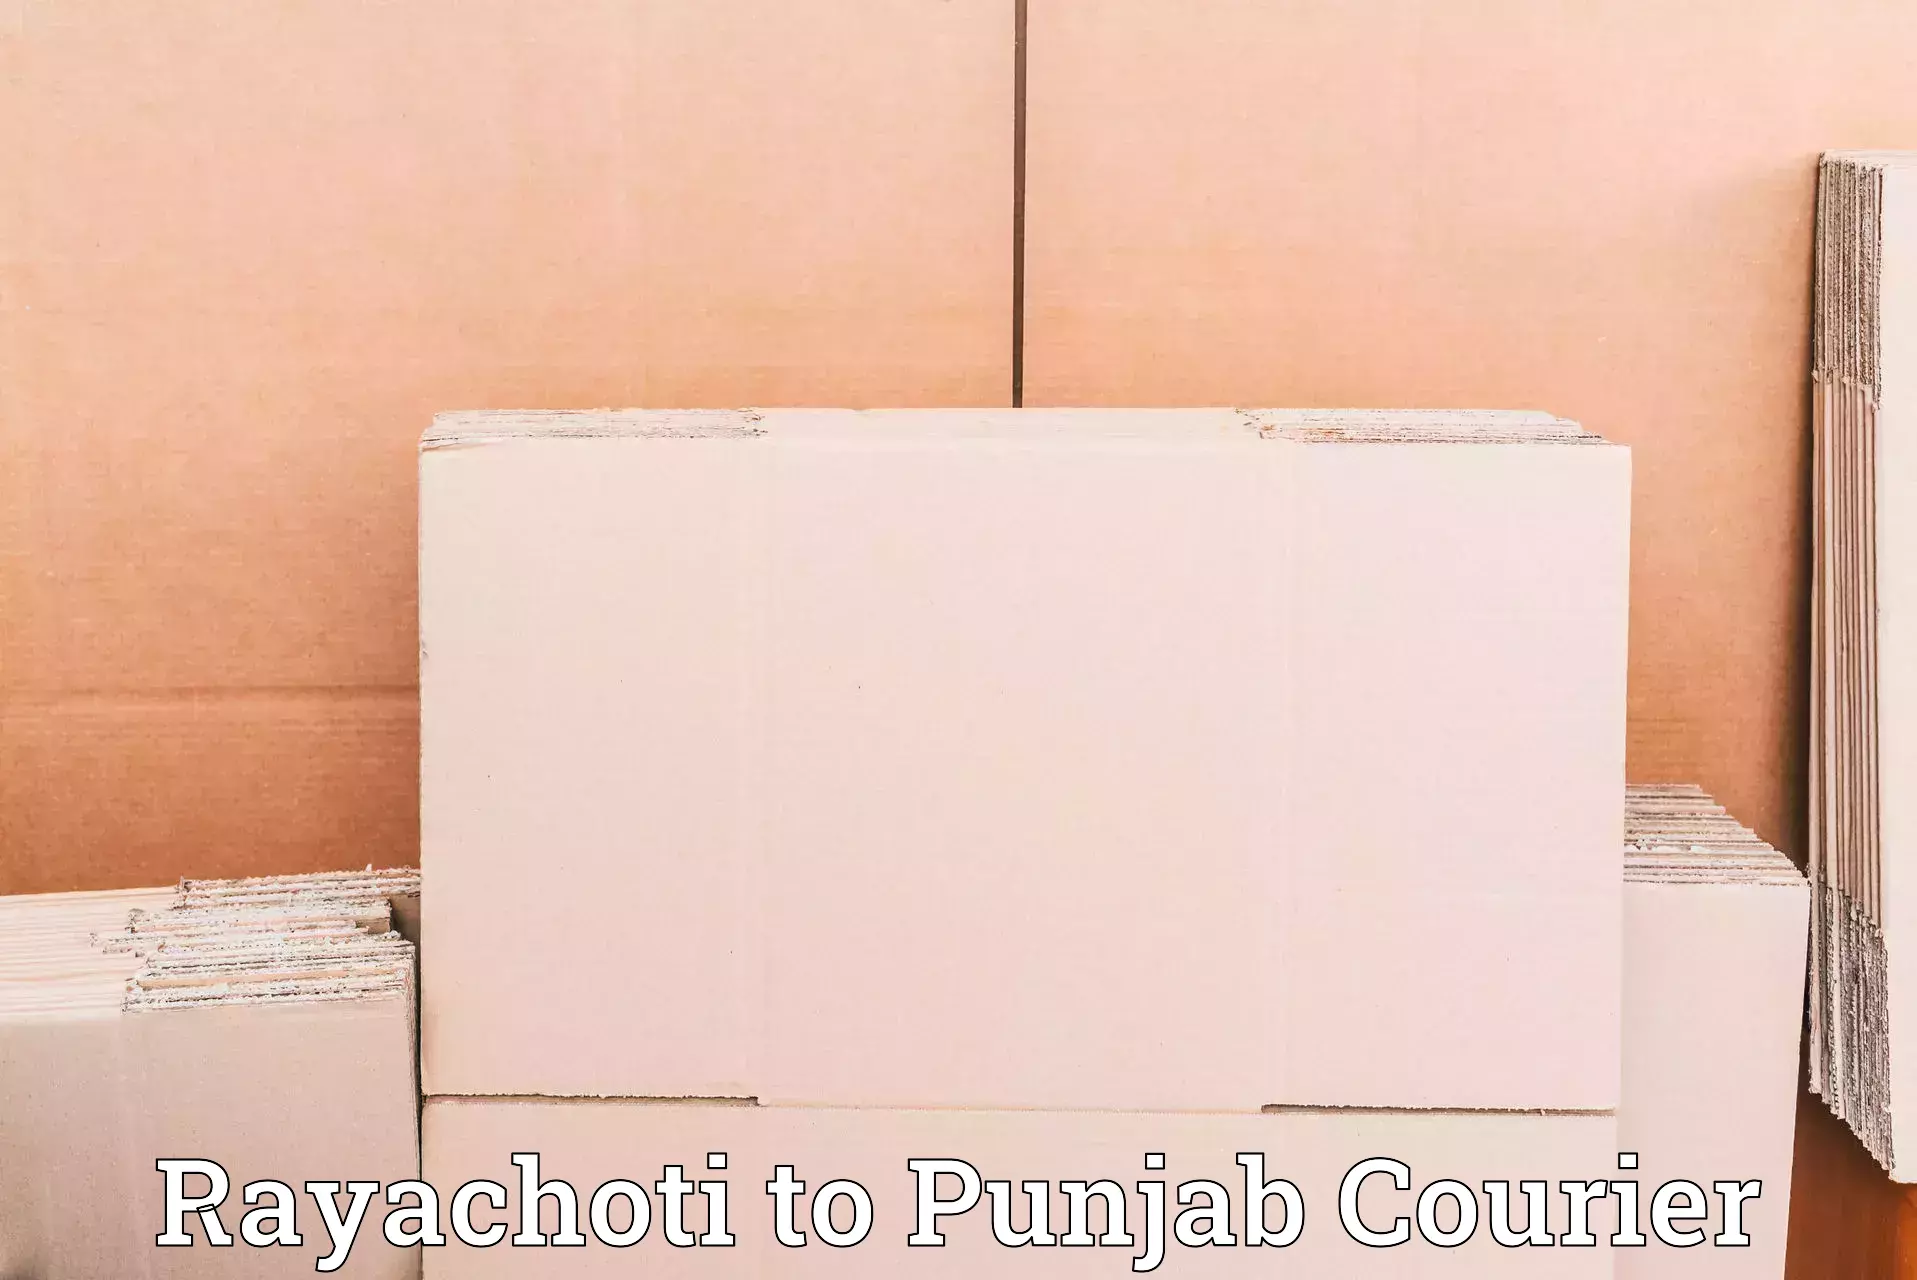 Efficient parcel tracking Rayachoti to Patiala